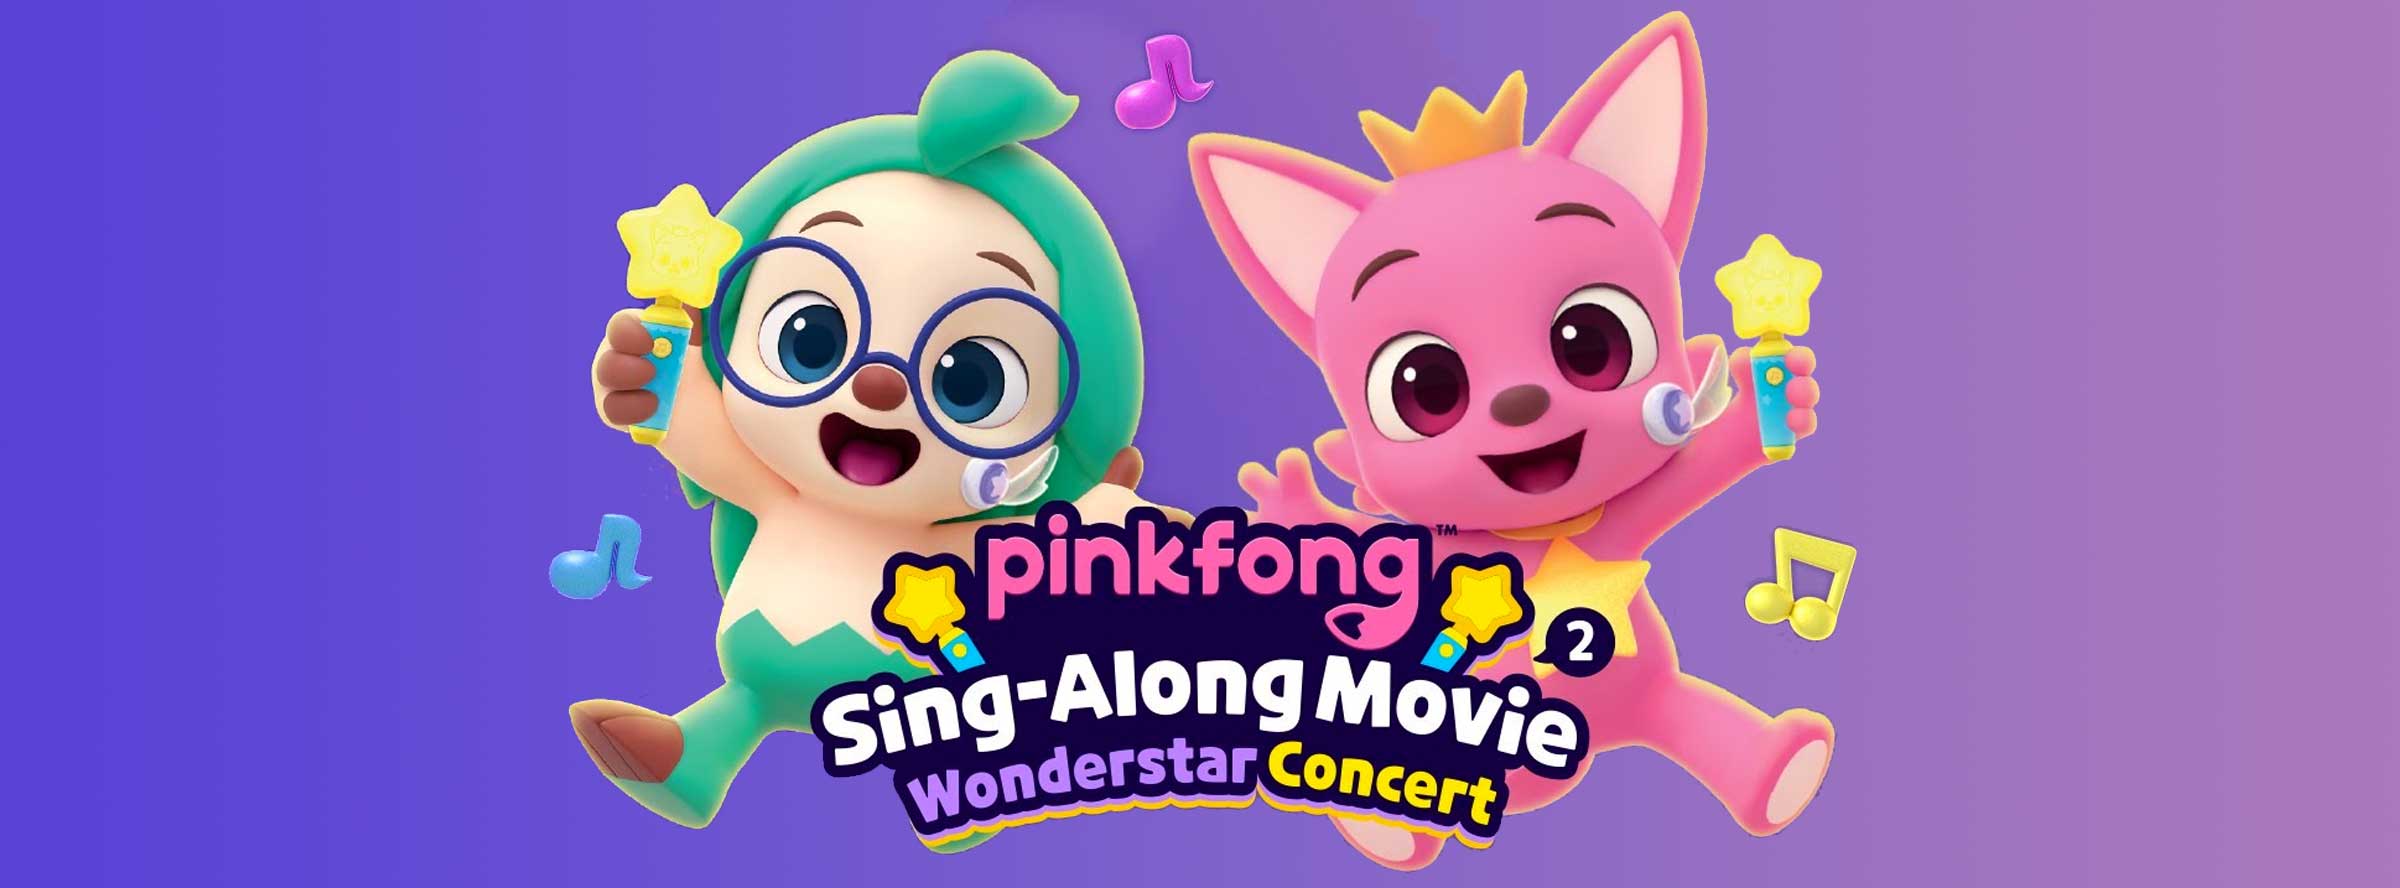 Slider Image for Pinkfong Sing-Along Movie 2: Wonderstar Concert